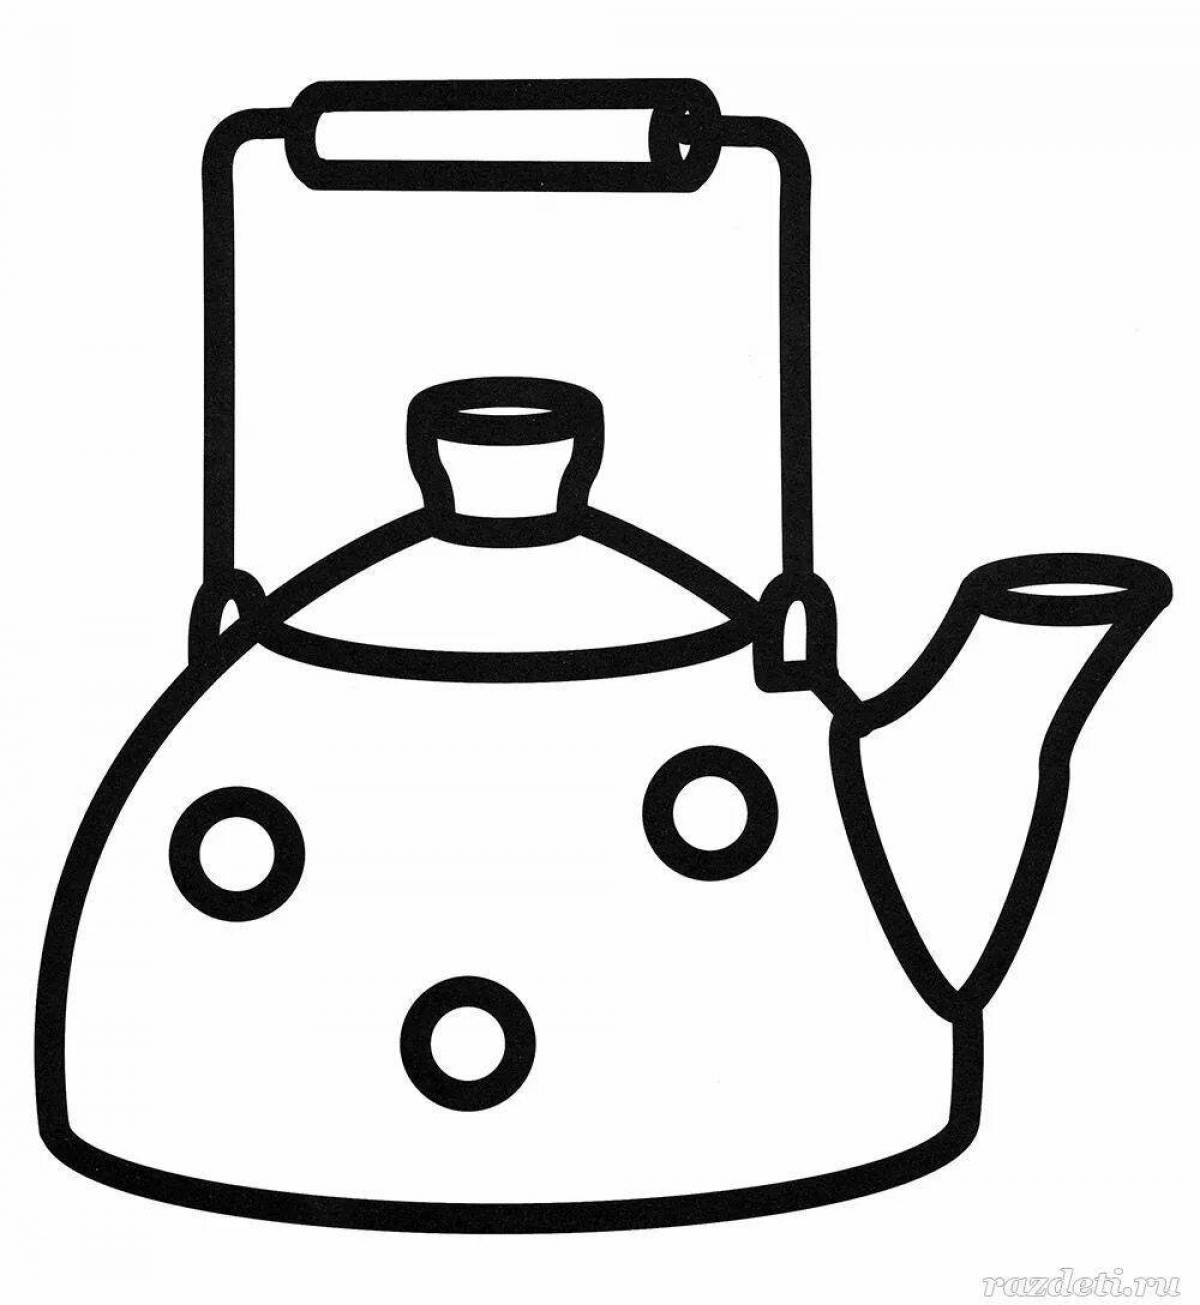 A fun teapot coloring book for babies